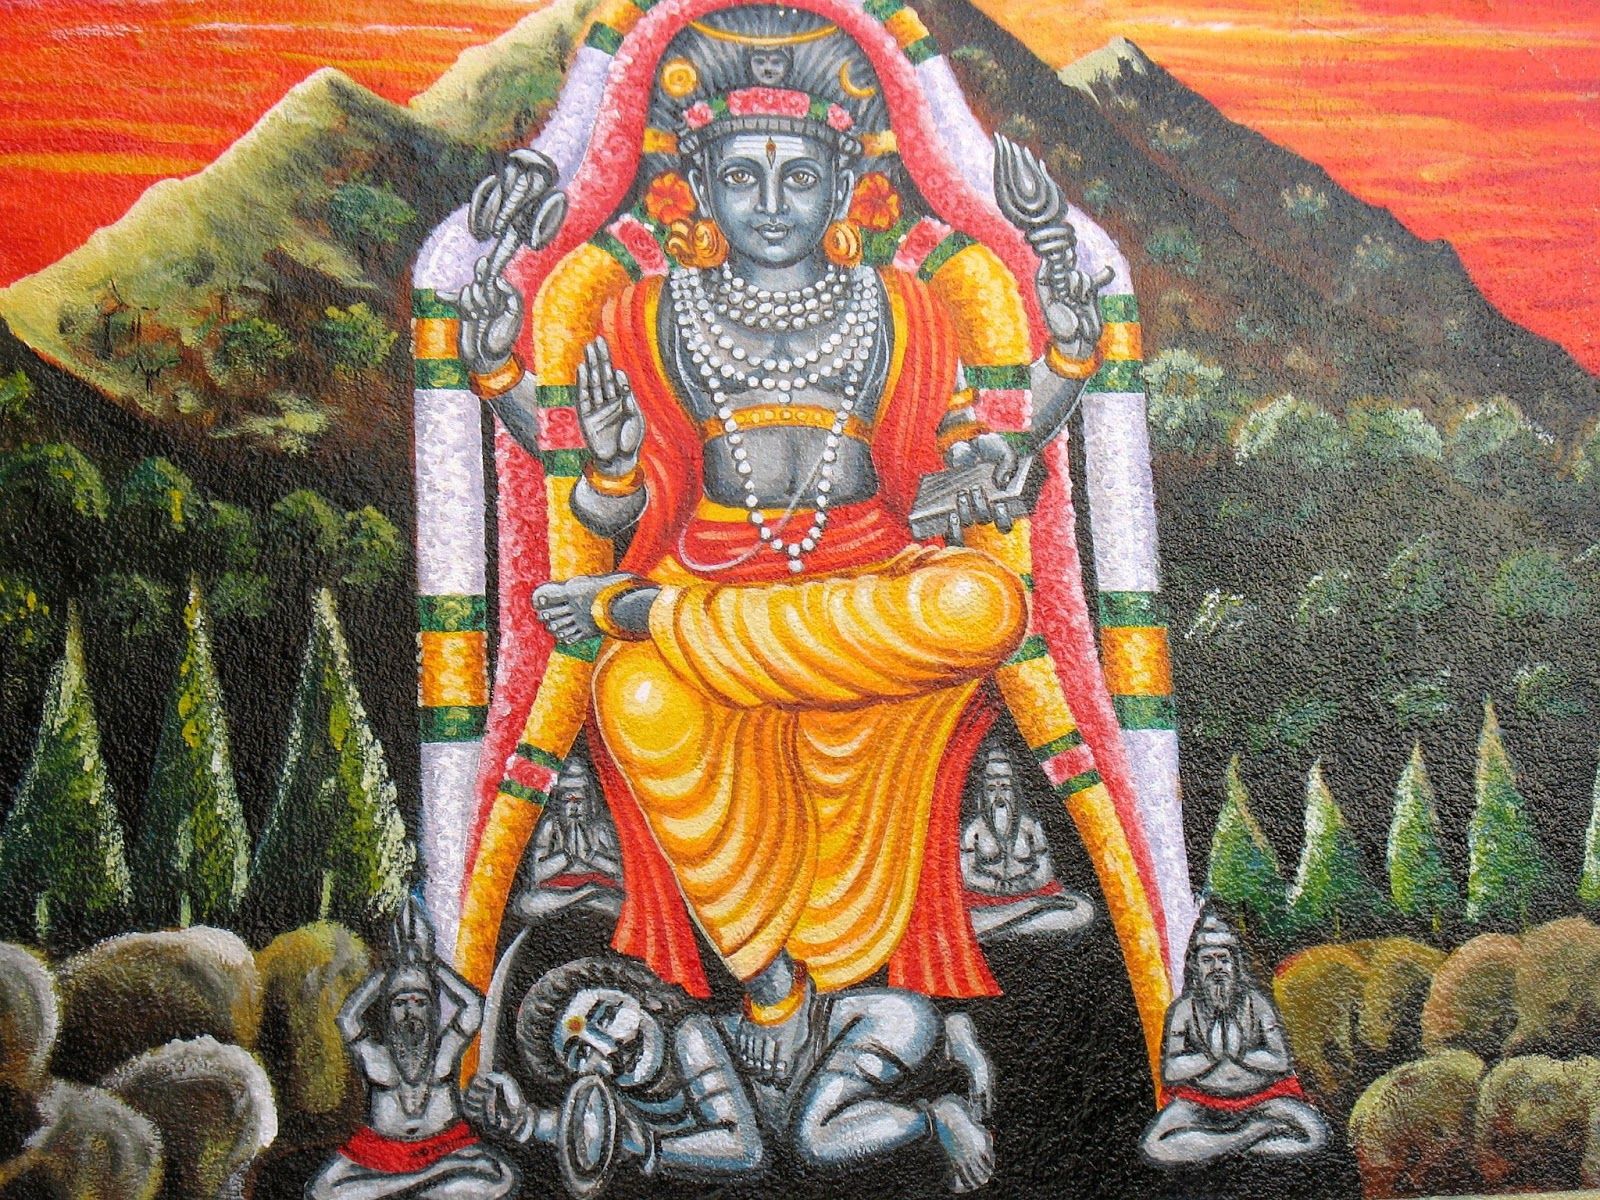 Annamalaiyar Tiruvannamalai e Shiva e Image Gallery e